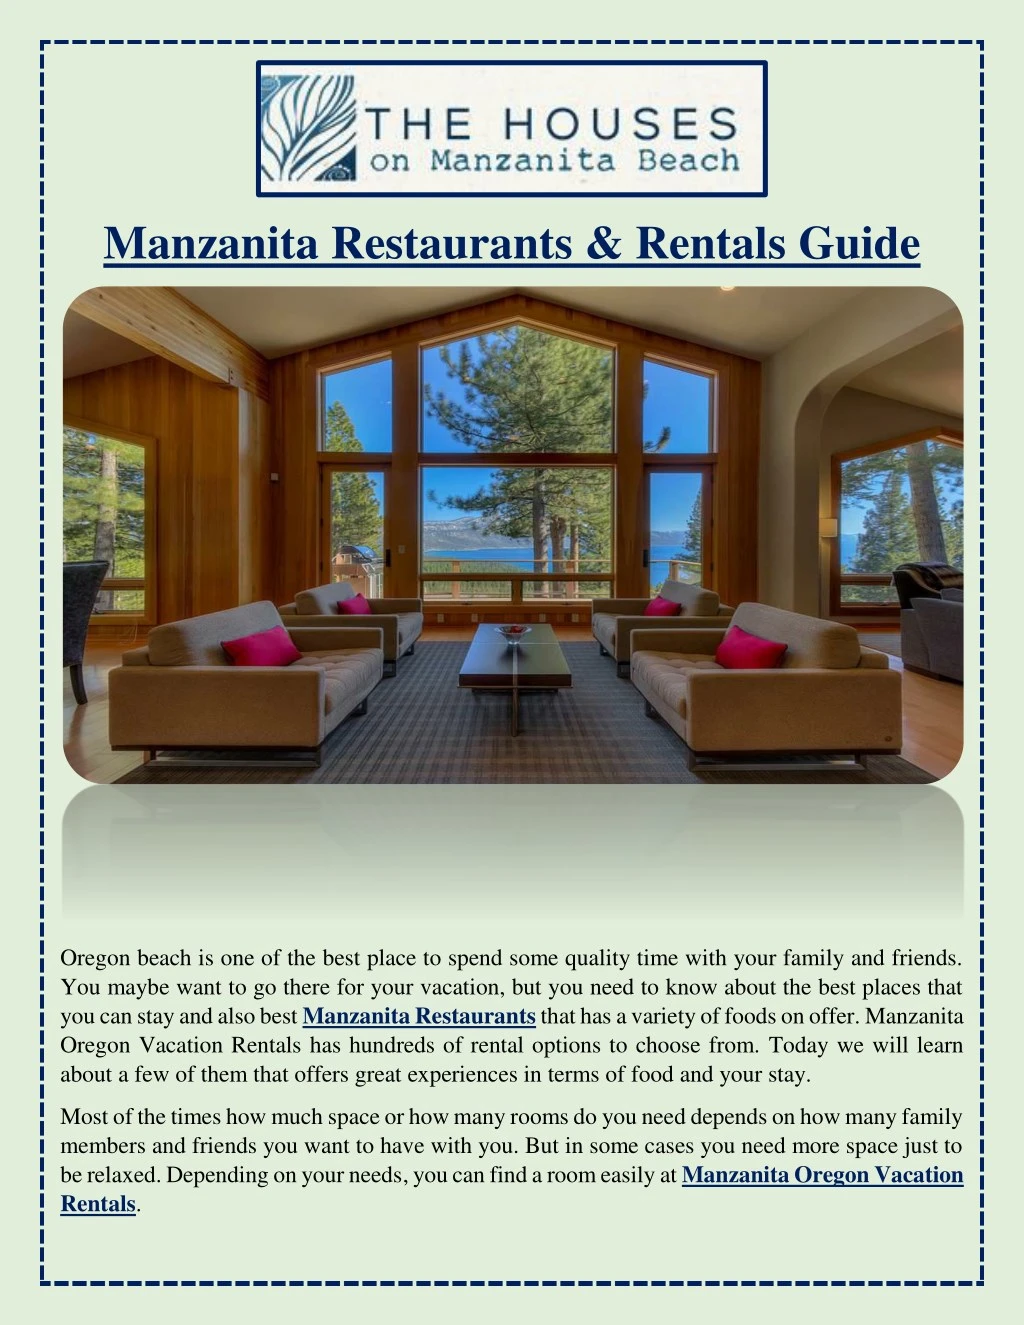 manzanita restaurants rentals guide